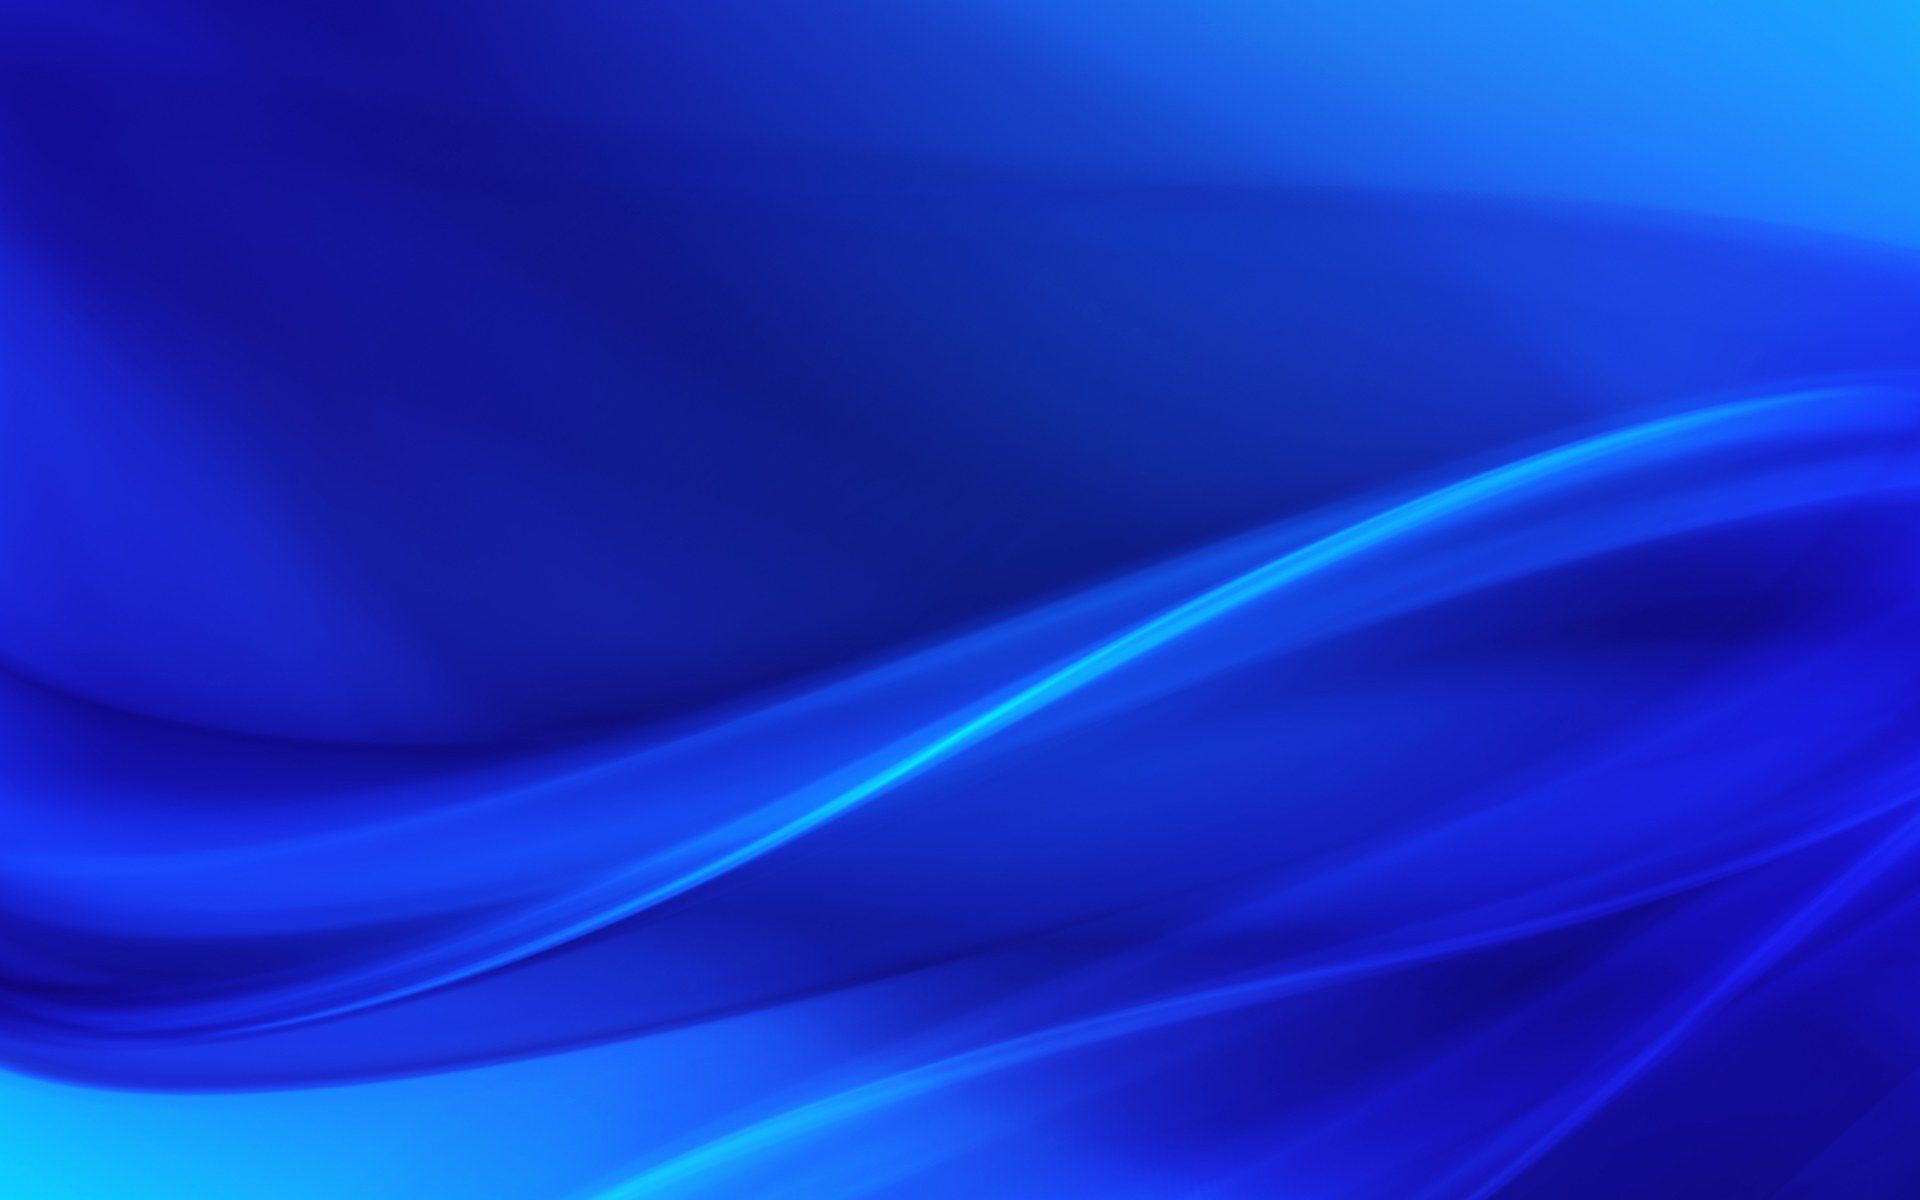 fond d'écran abstrait bleu,bleu,bleu électrique,bleu cobalt,aqua,lumière